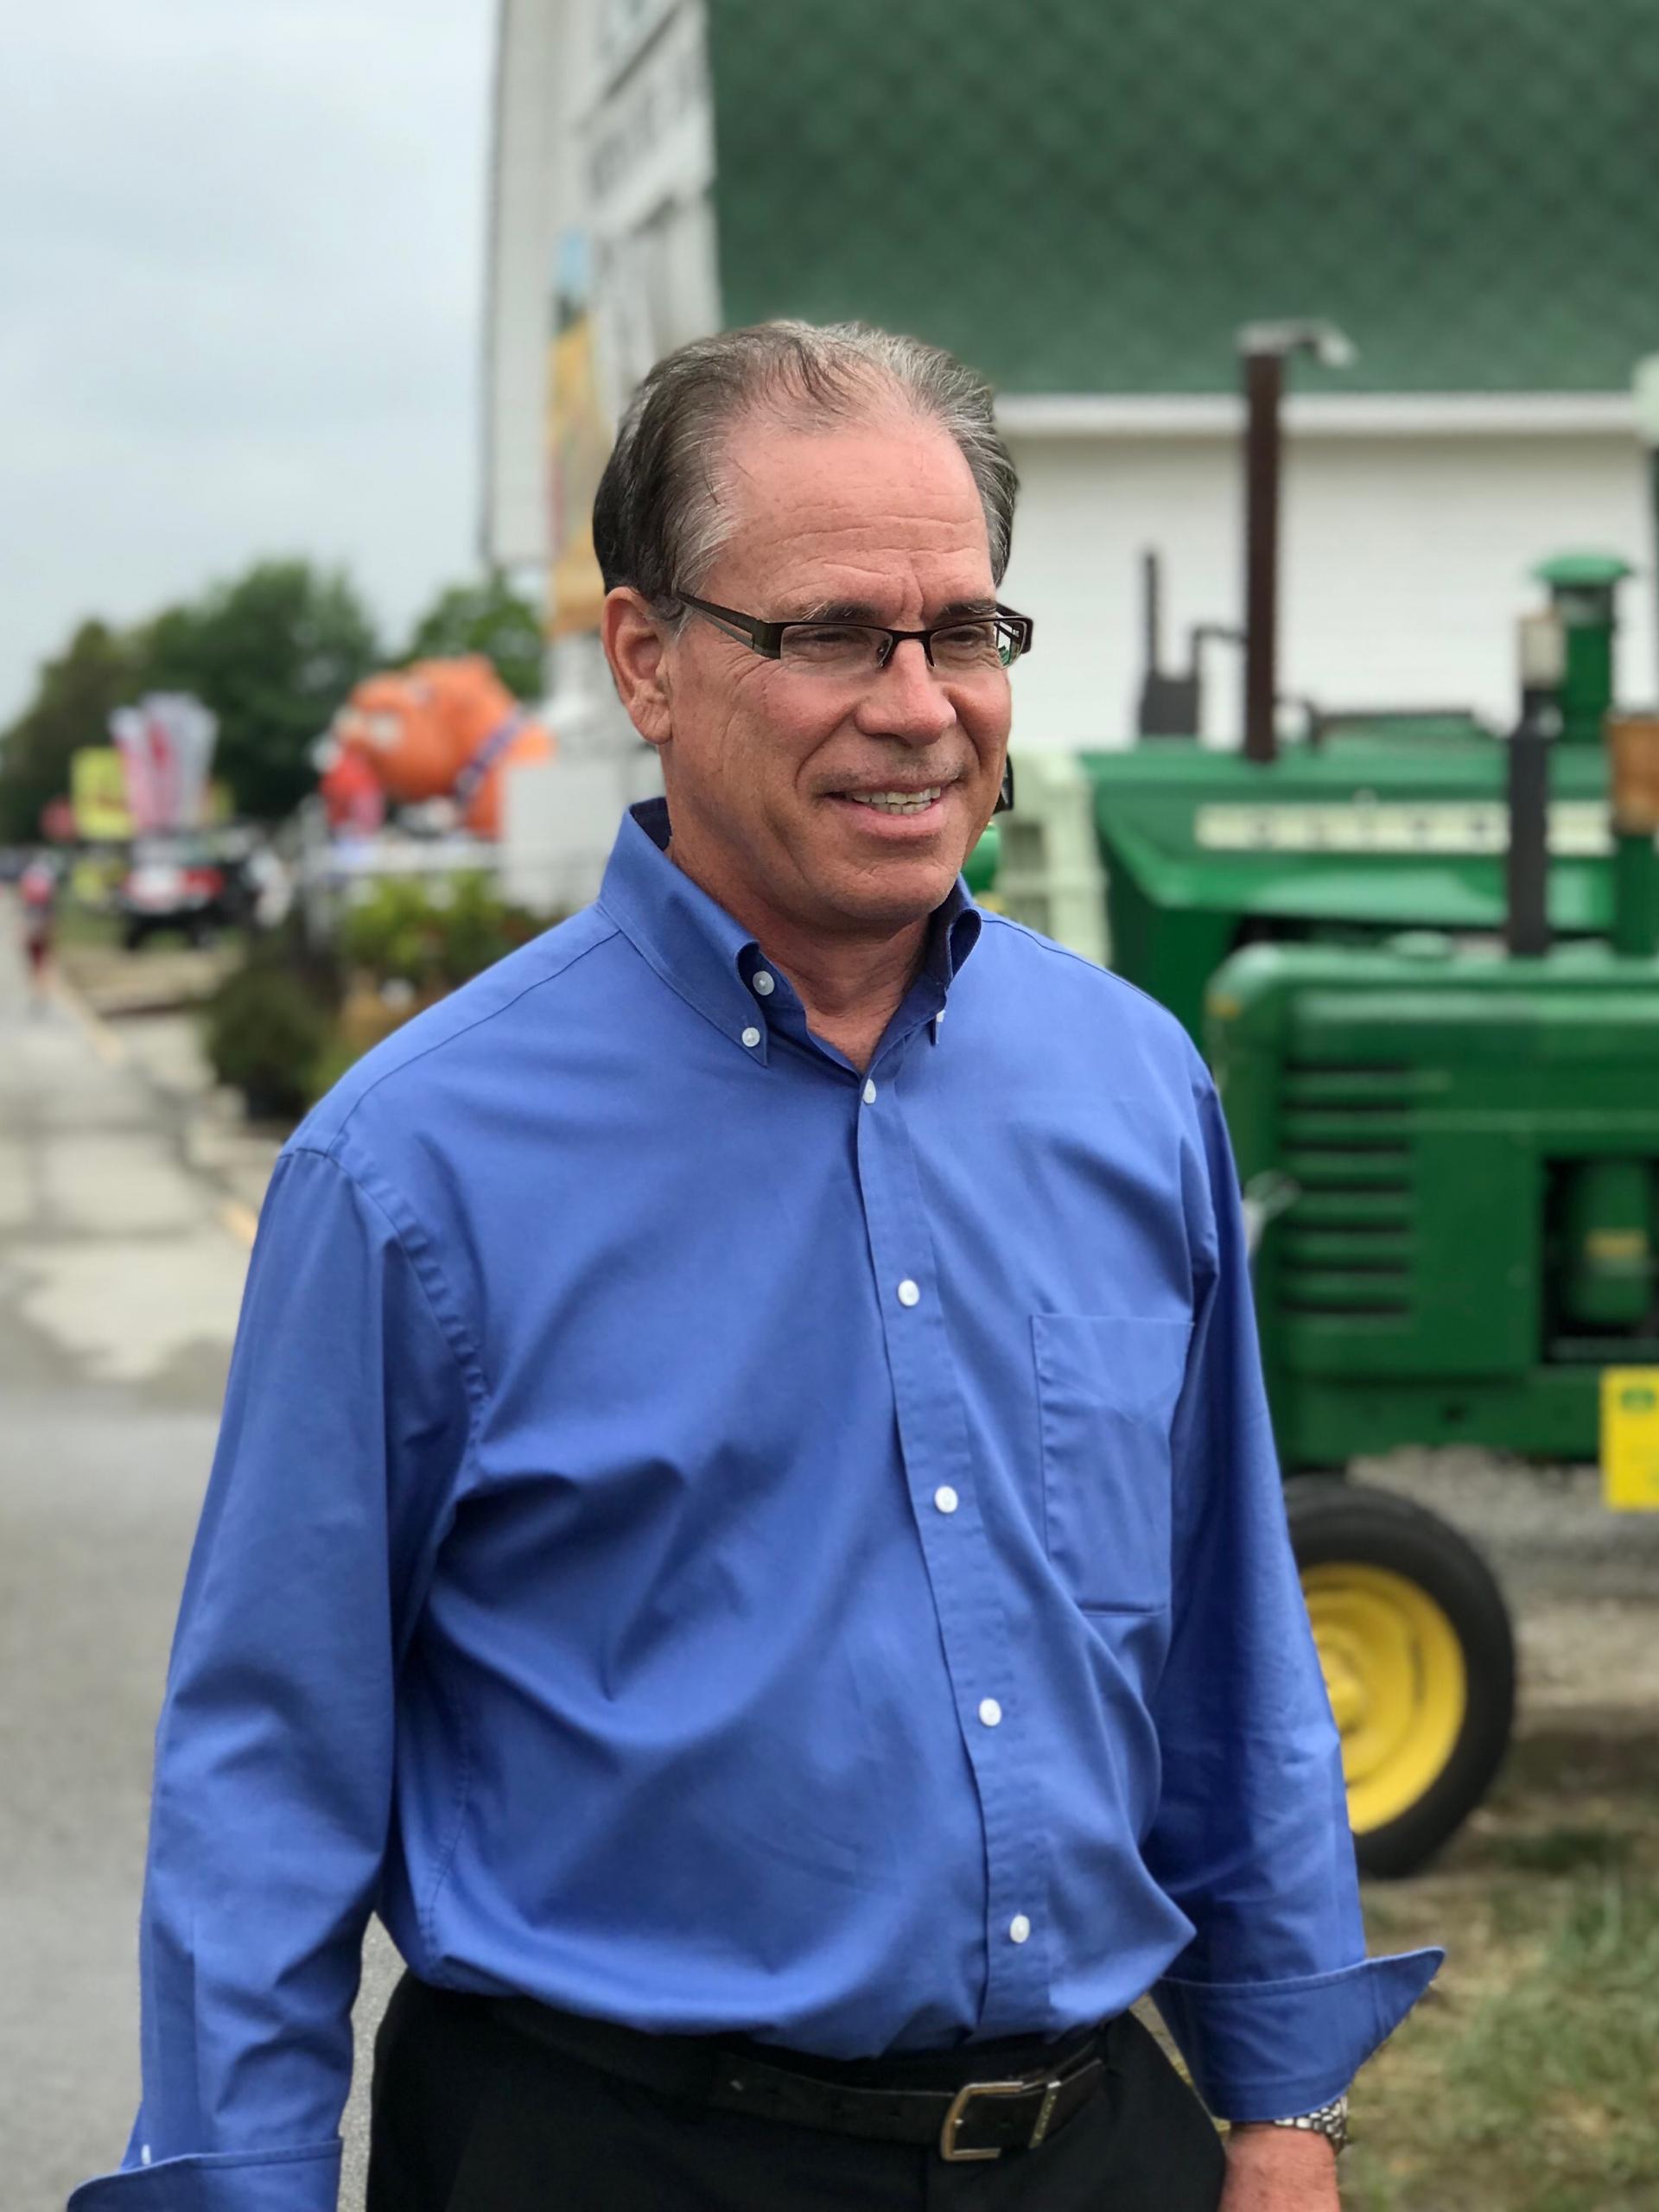 Senator Braun at Indiana State Fair